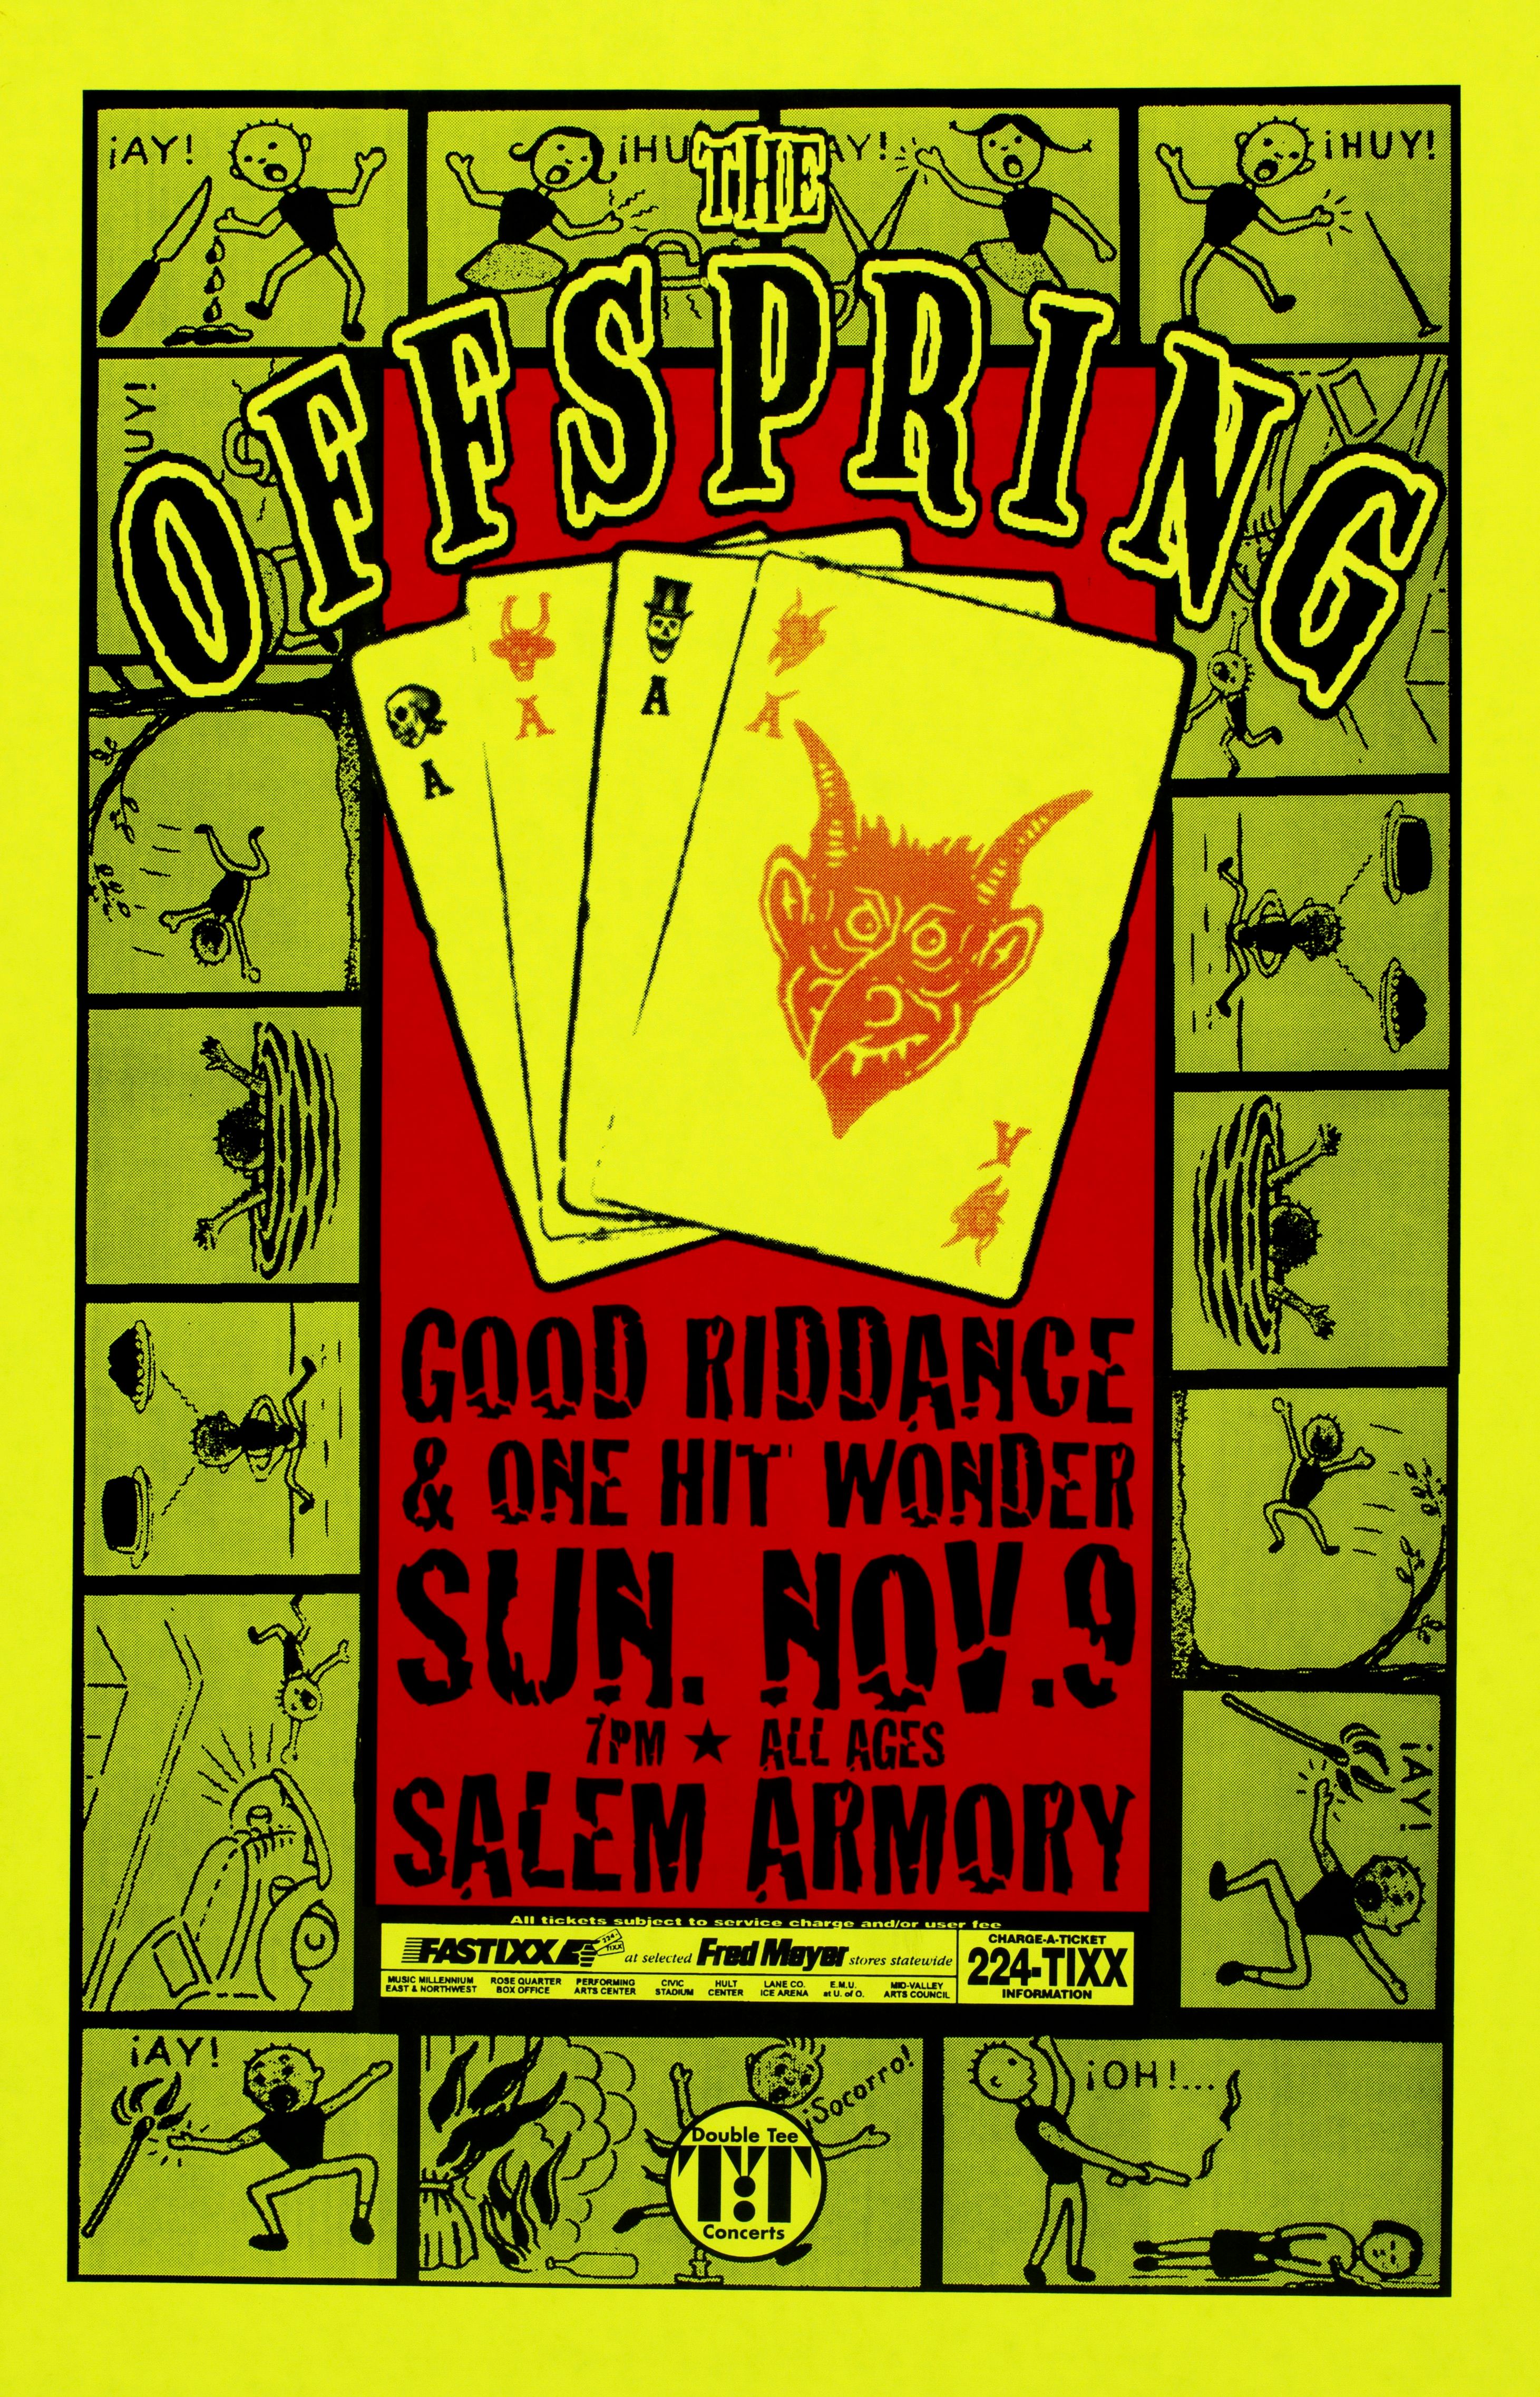 MXP-85.3 The Offspring Salem Armory 1997 Concert Poster